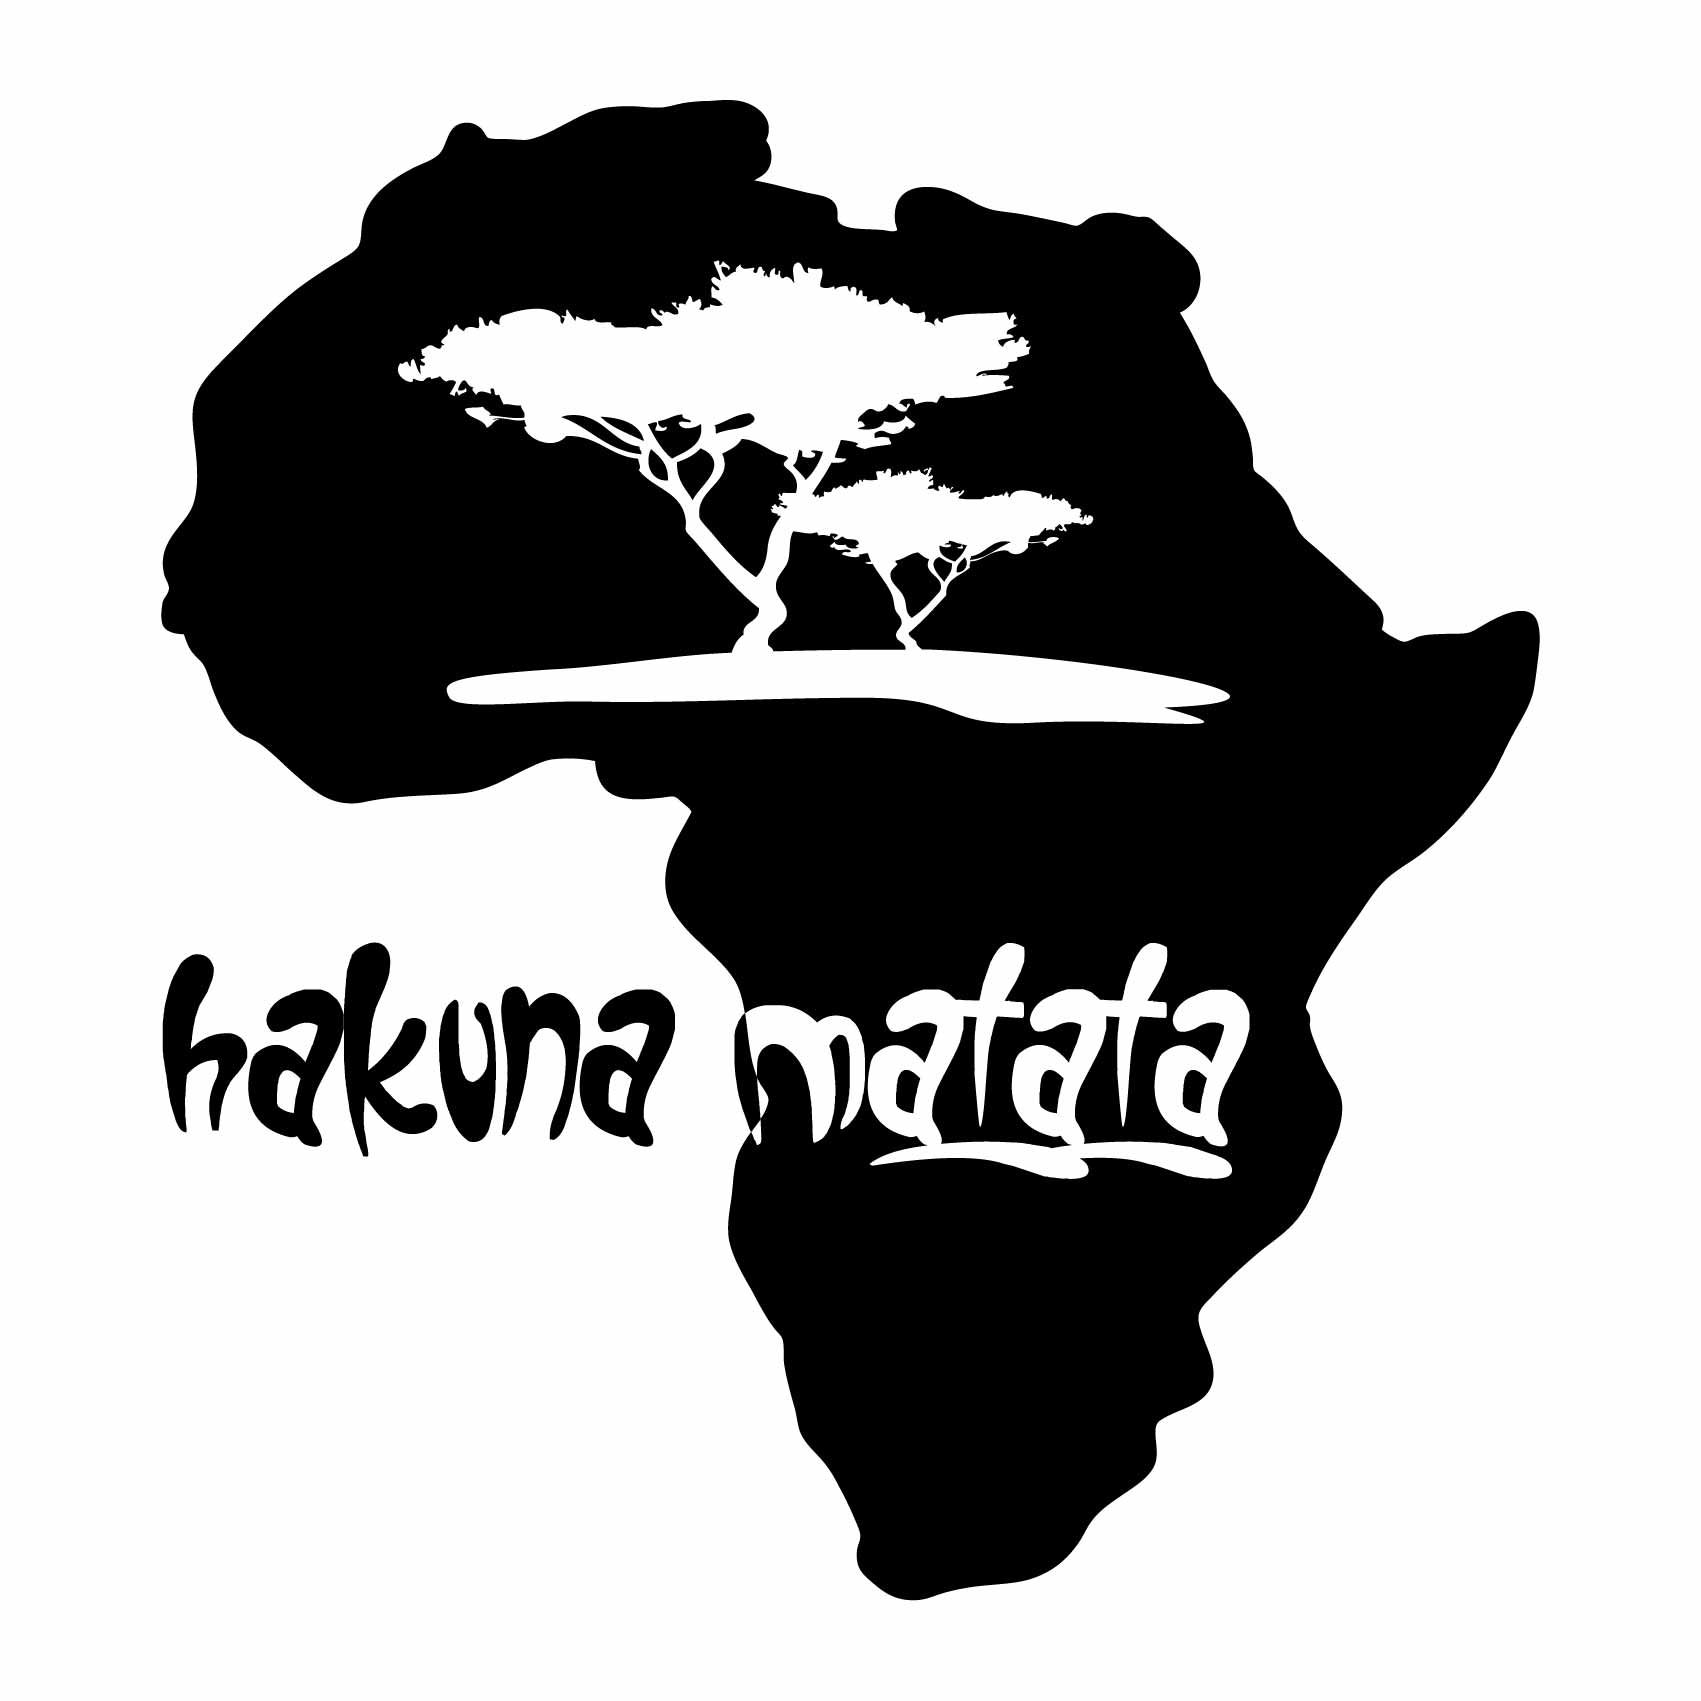 stickers-hakuna-matata-afrique-ref2afrique-stickers-muraux-afrique-autocollant-deco-mur-salon-chambre-sticker-mural-africa-(2)